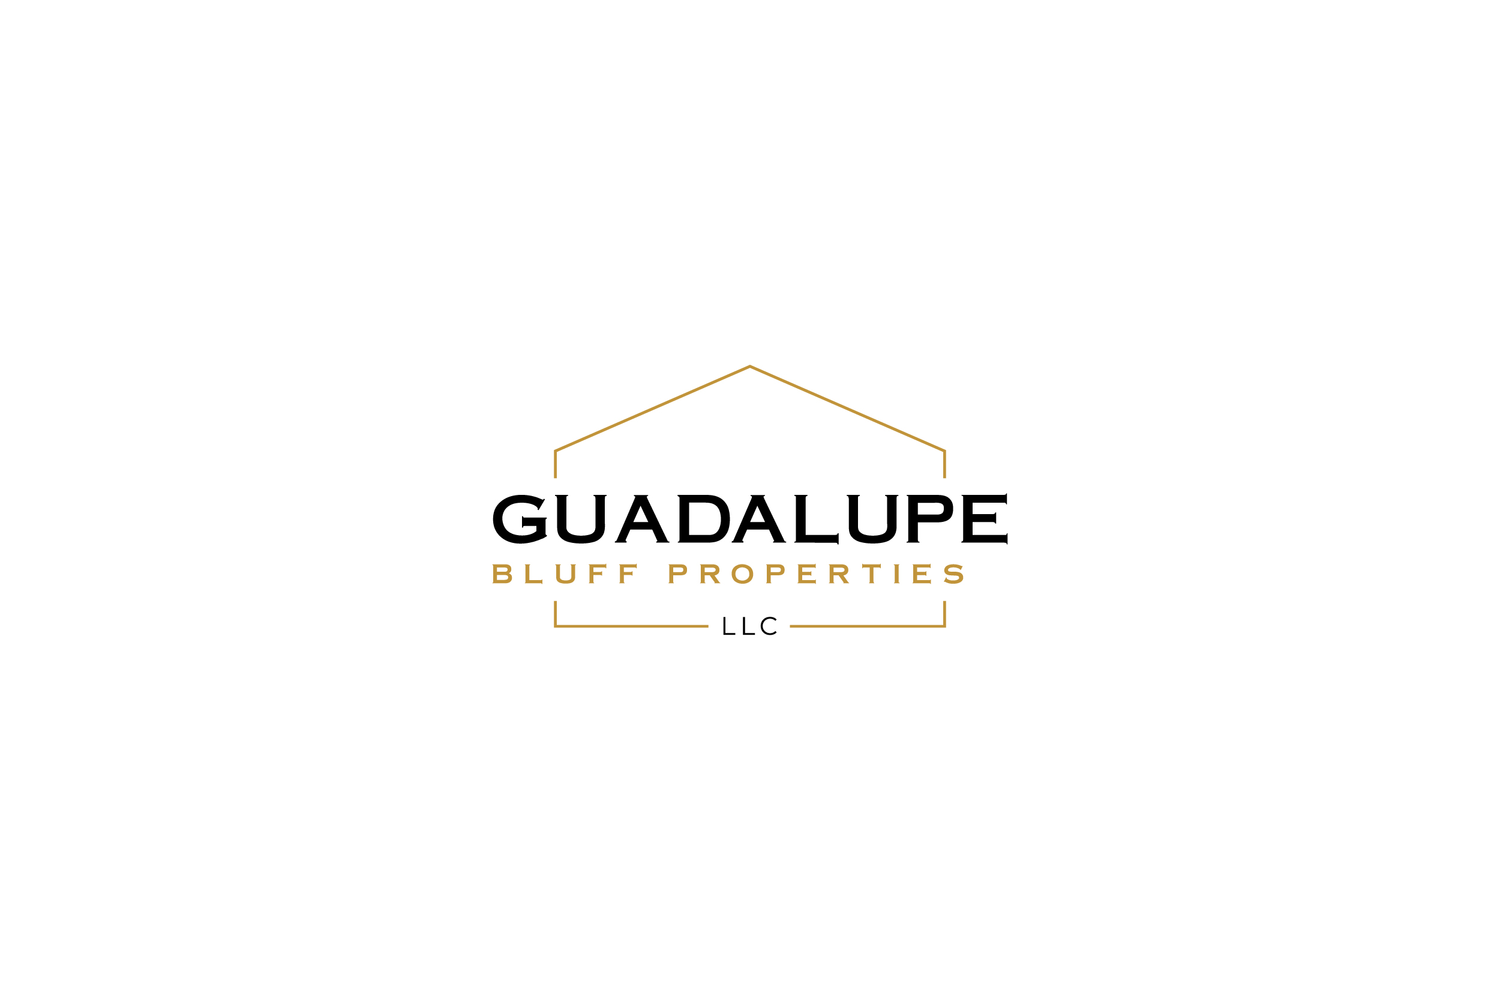 GUADLUPE BLUFF PROPERTIES LLC